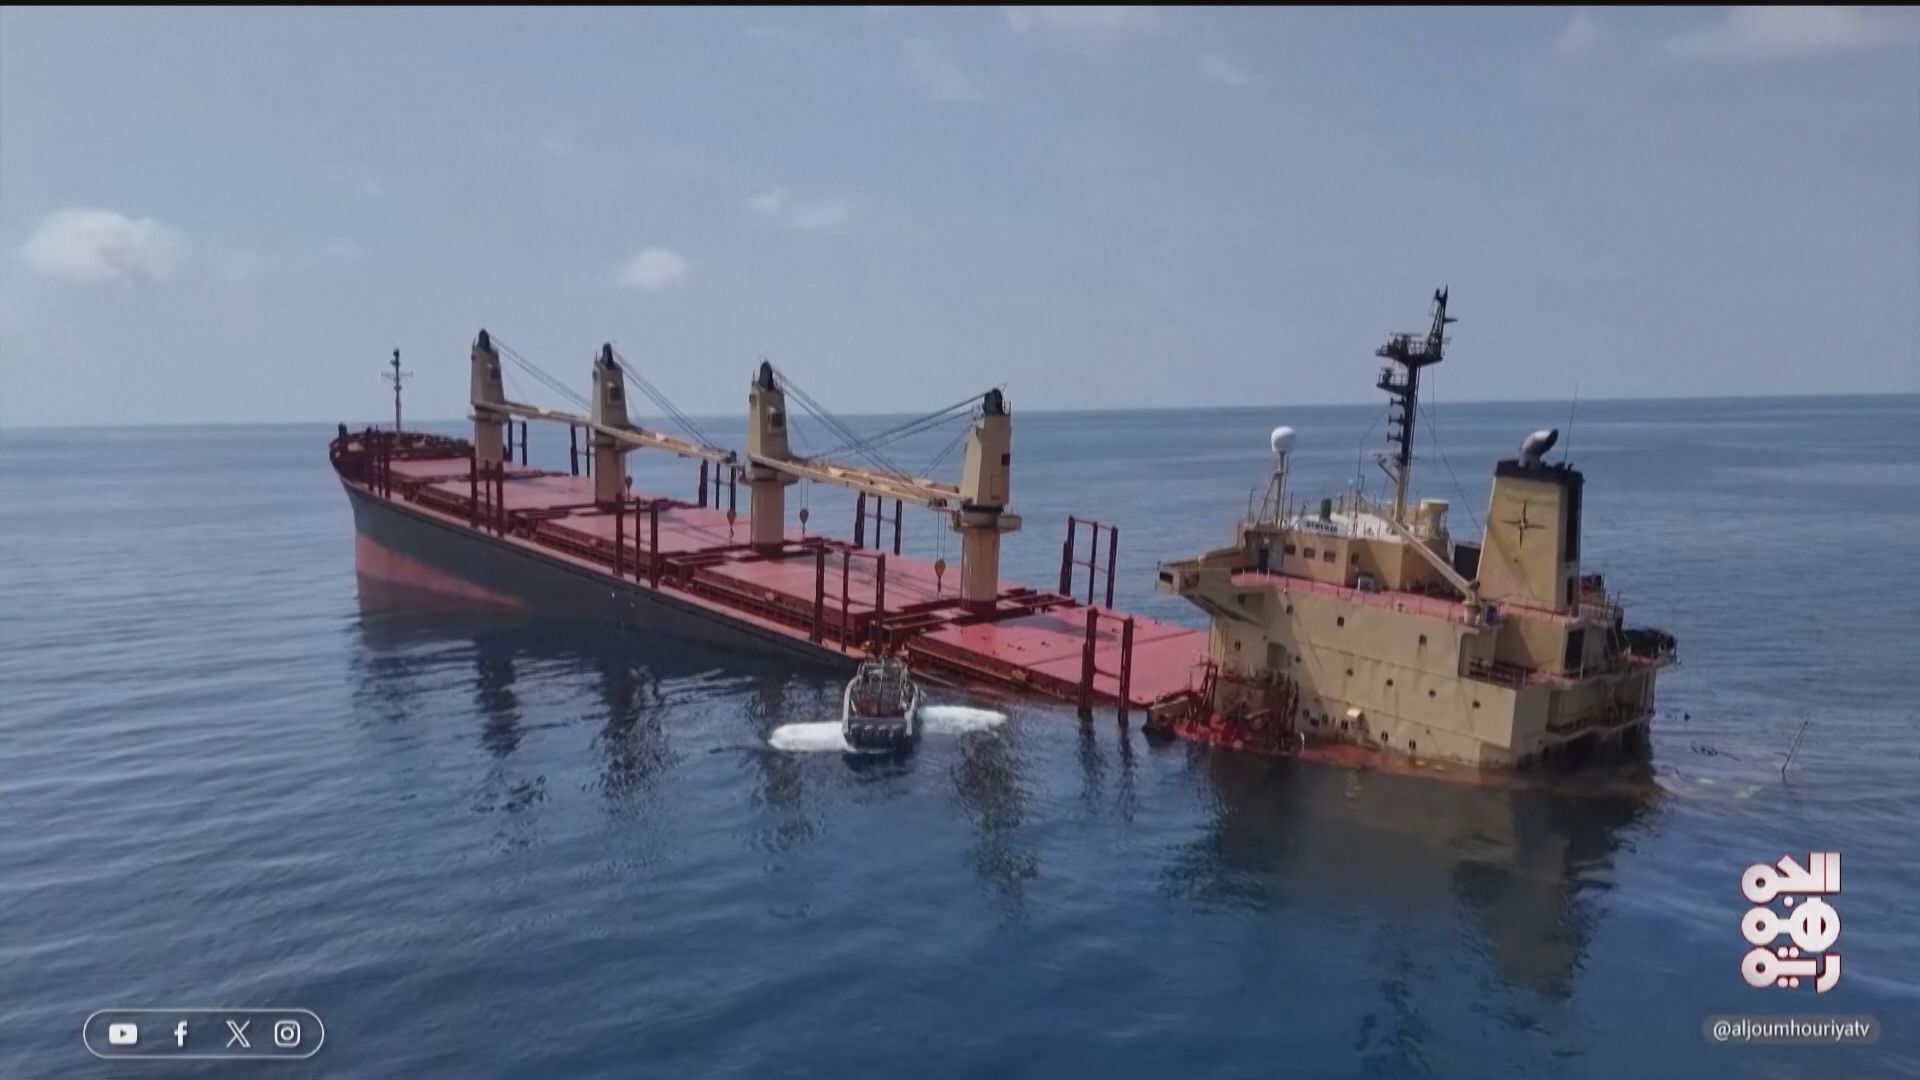 Sunken ship carrying fertilizer sparks environmental fears